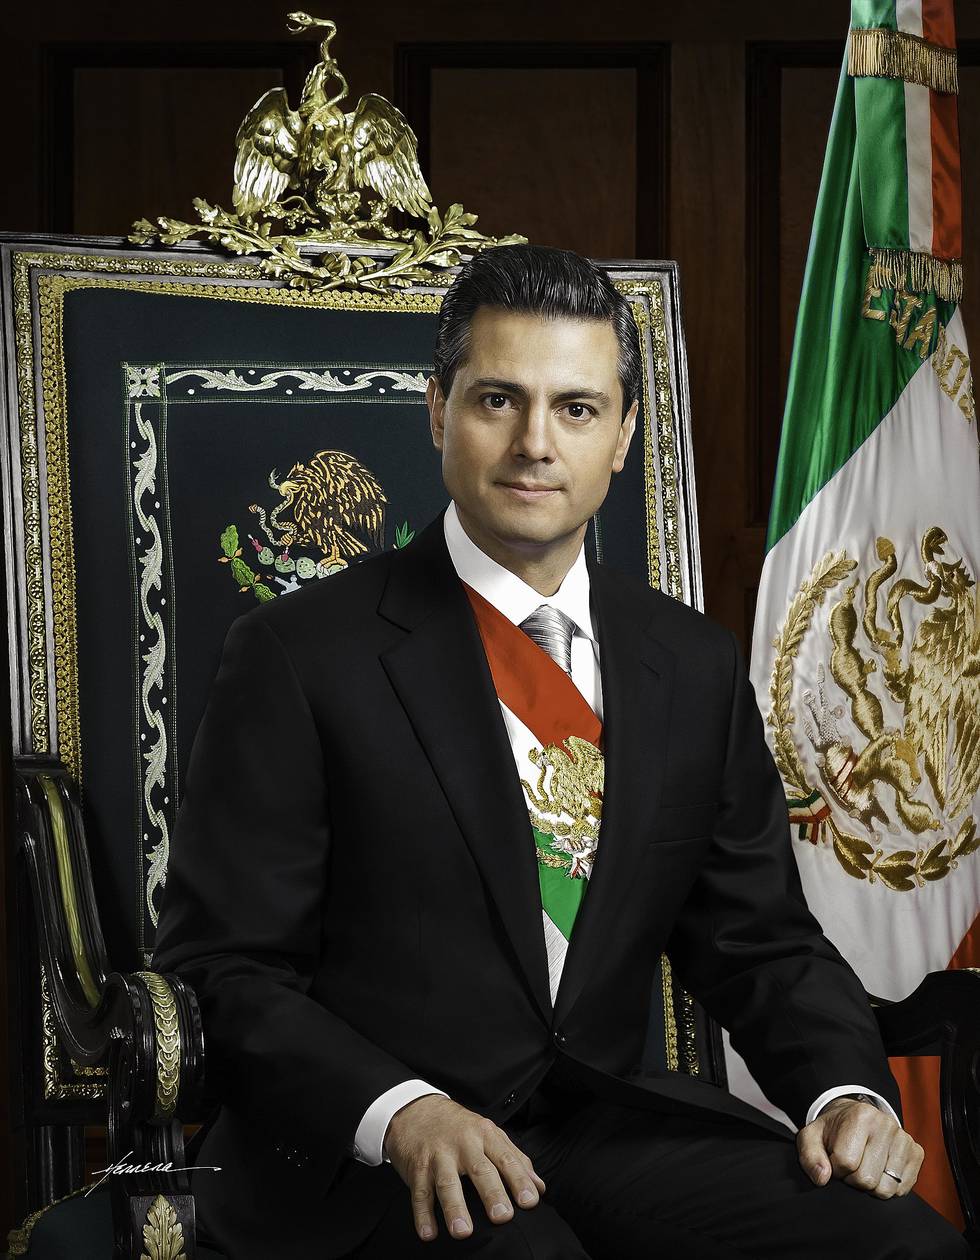 Presidente_Enrique_Peña_Nieto-Fotografía_oficial.jpg